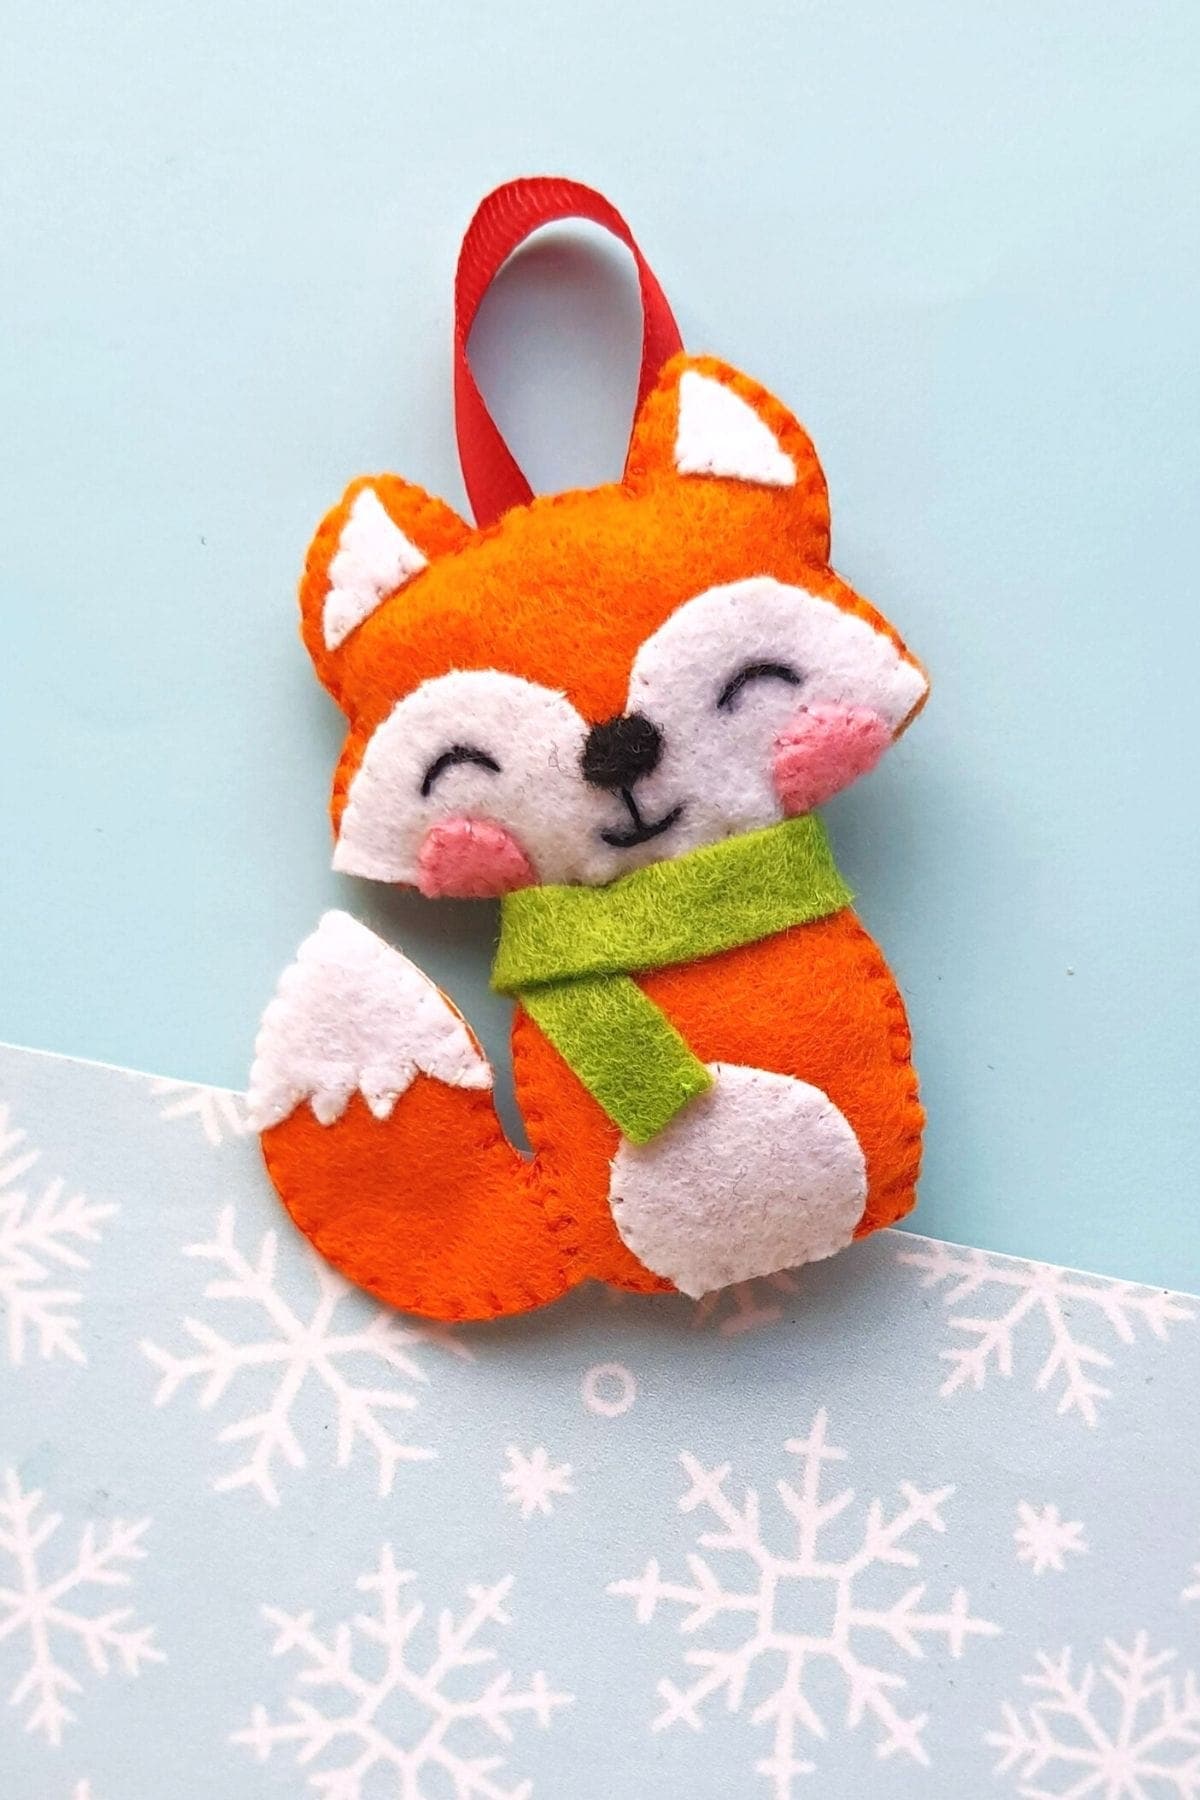 Felt fox ornament